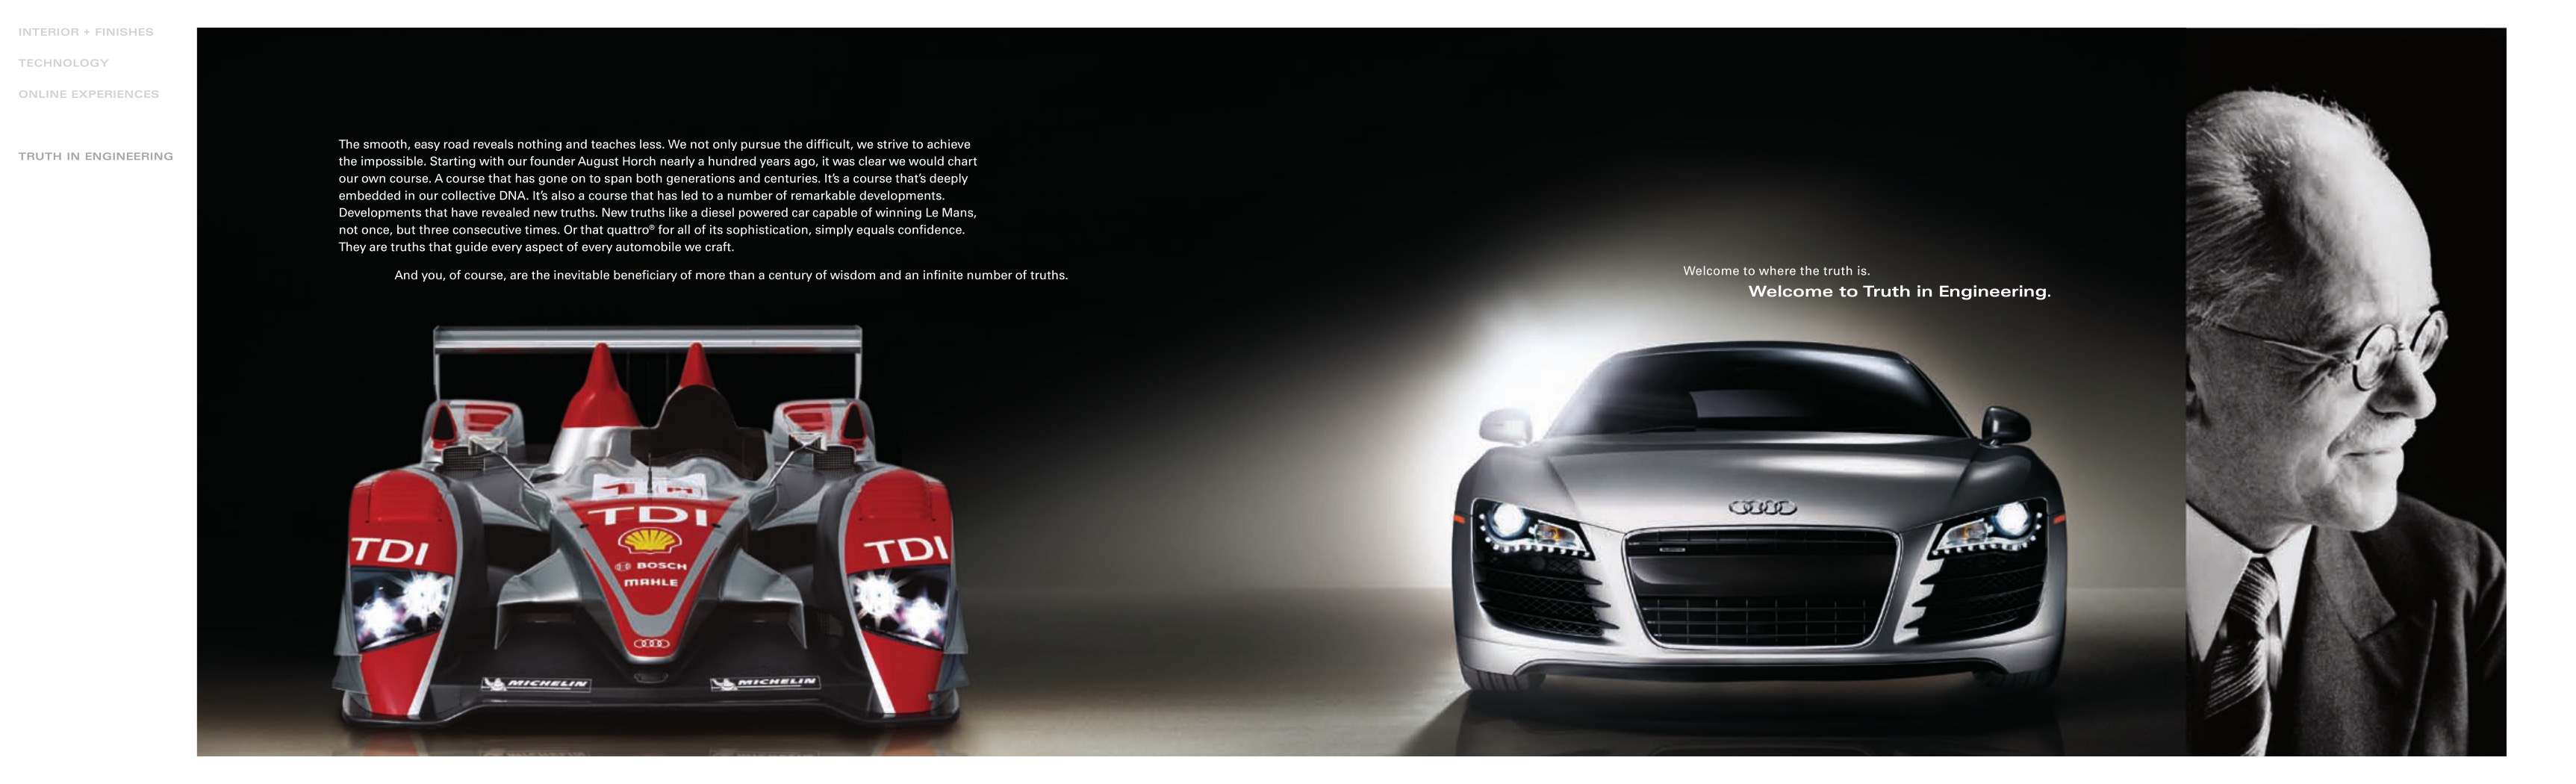 2009 Audi Brochure Page 2